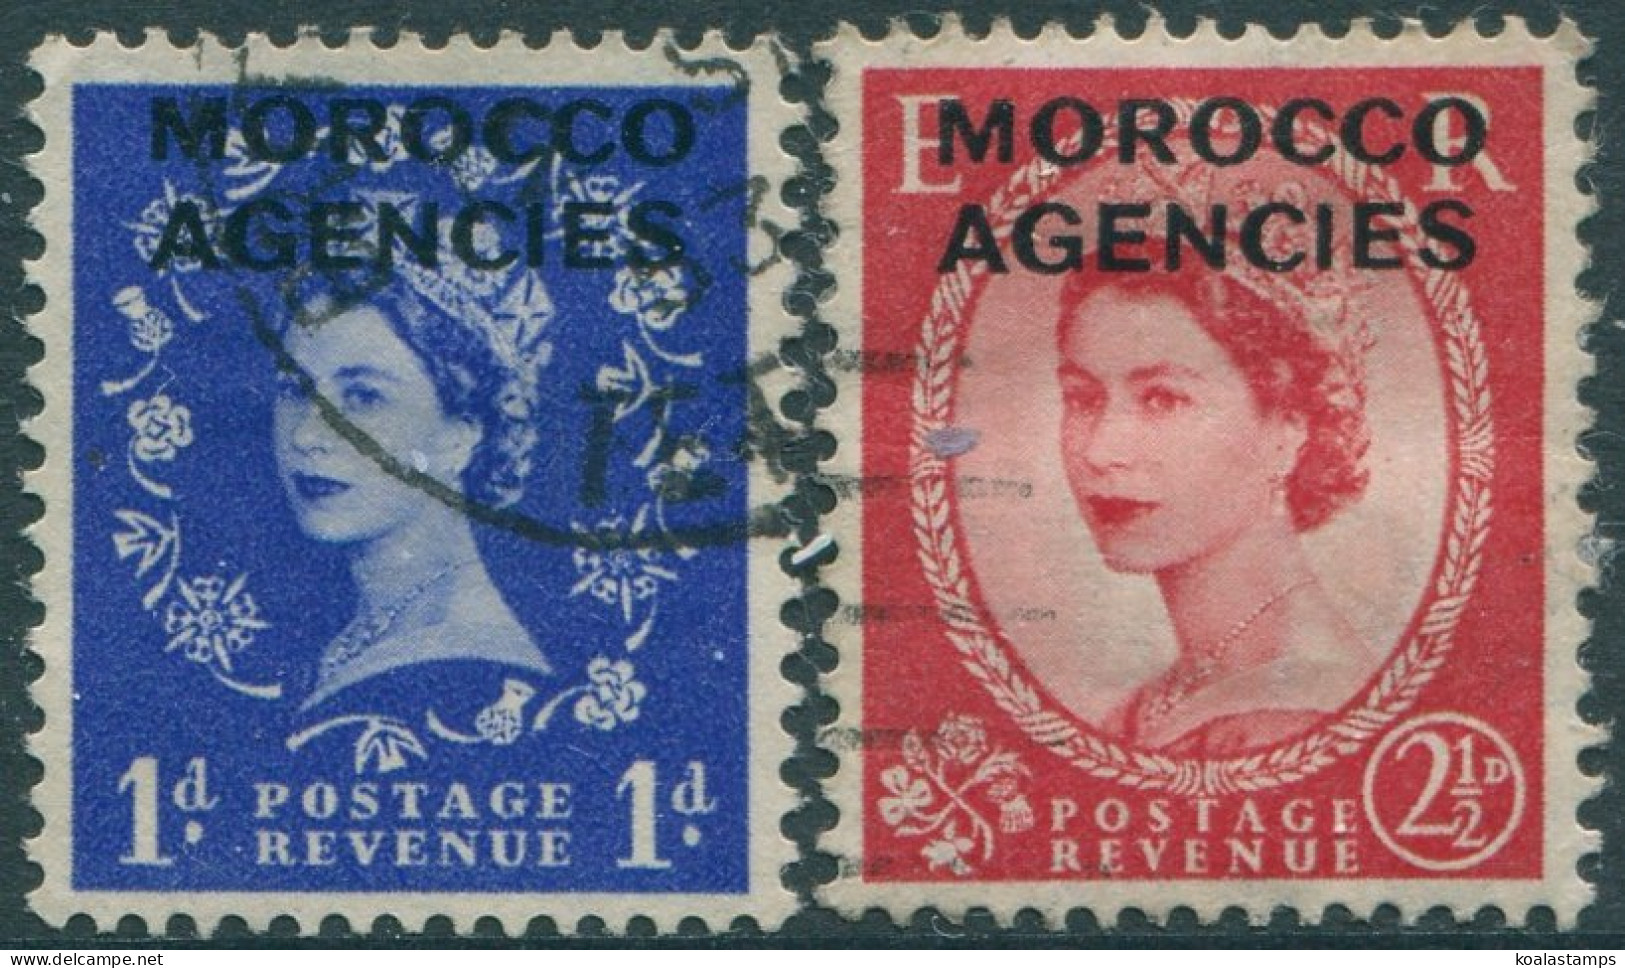 Morocco Agencies 1952 SG102-105 QEII (2) FU (amd) - Morocco Agencies / Tangier (...-1958)